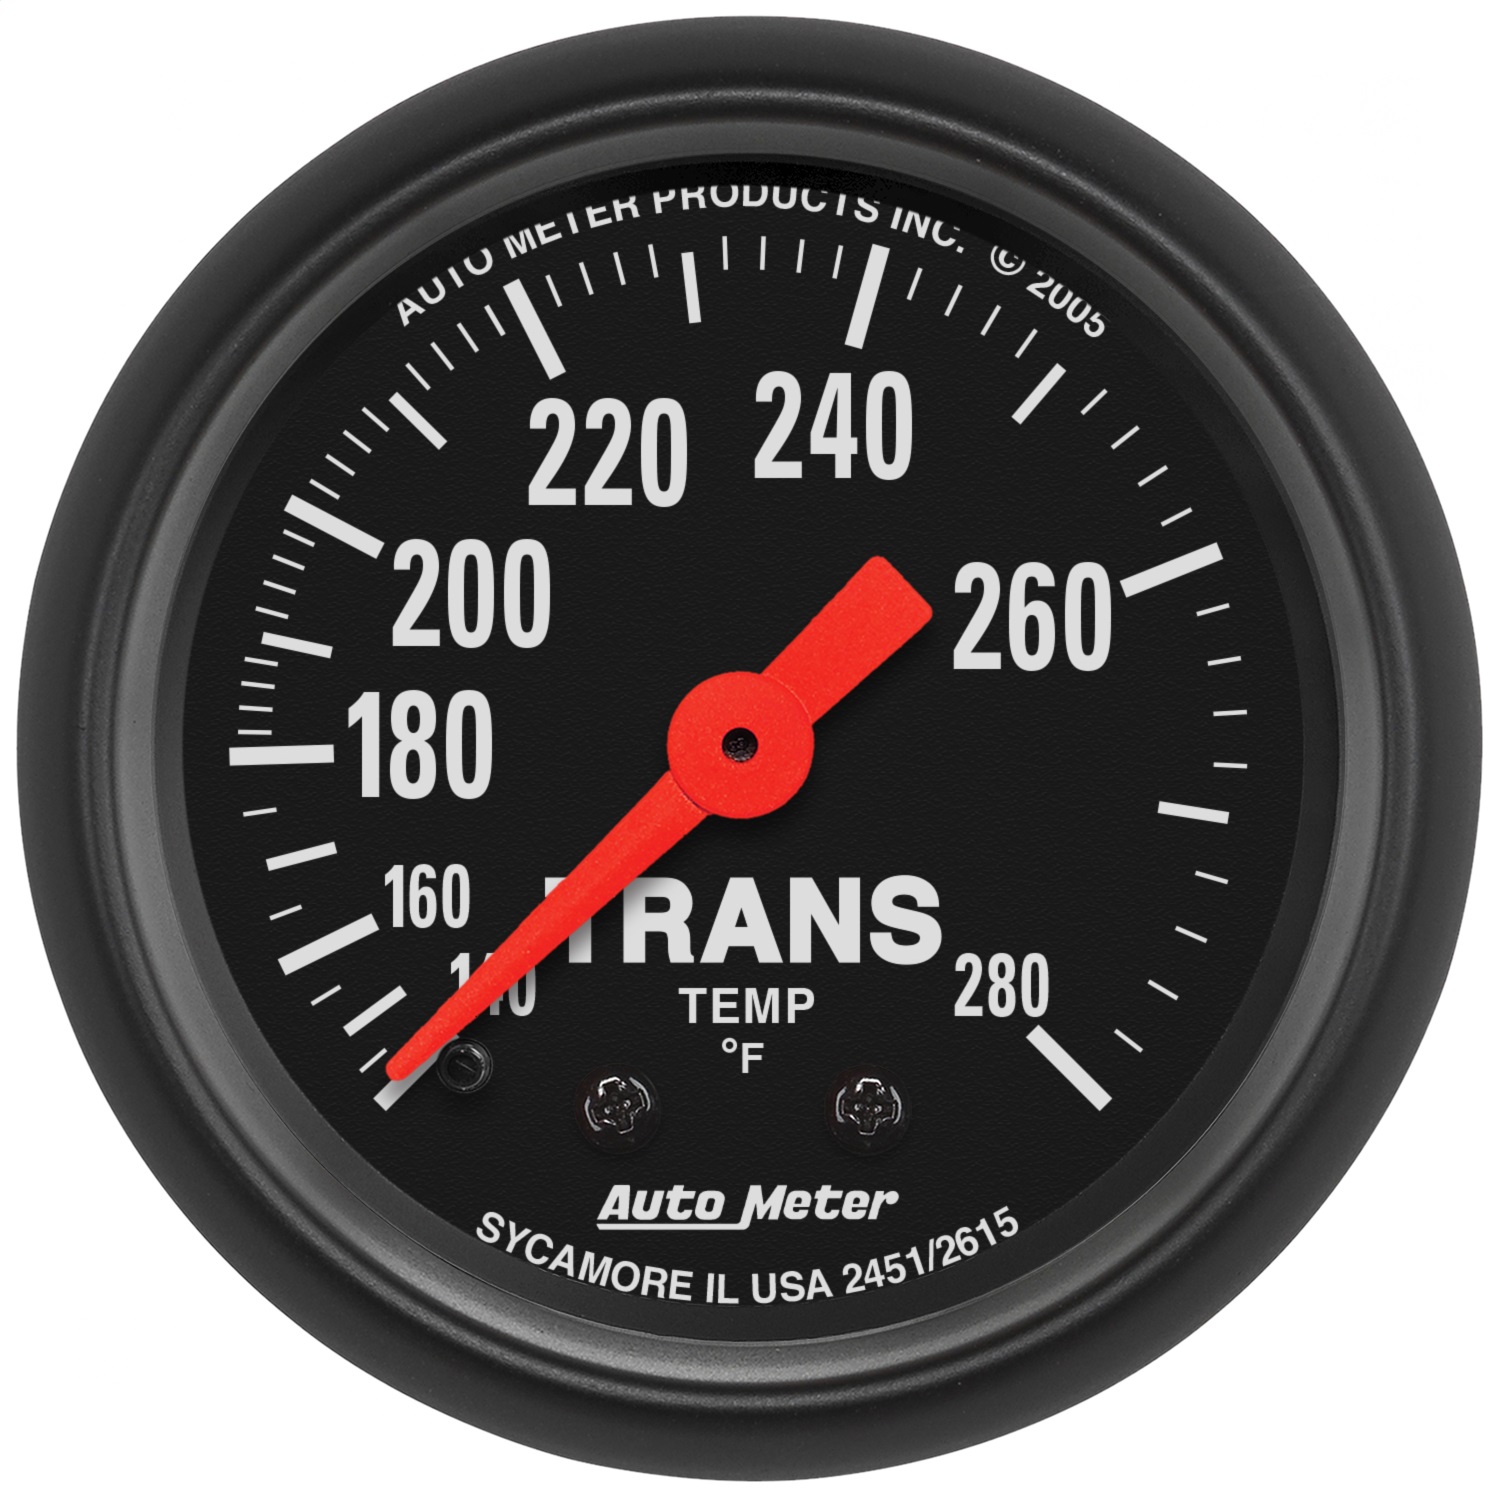 Auto Meter Auto Meter 2615 Z-Series; Mechanical Transmission Temperature Gauge